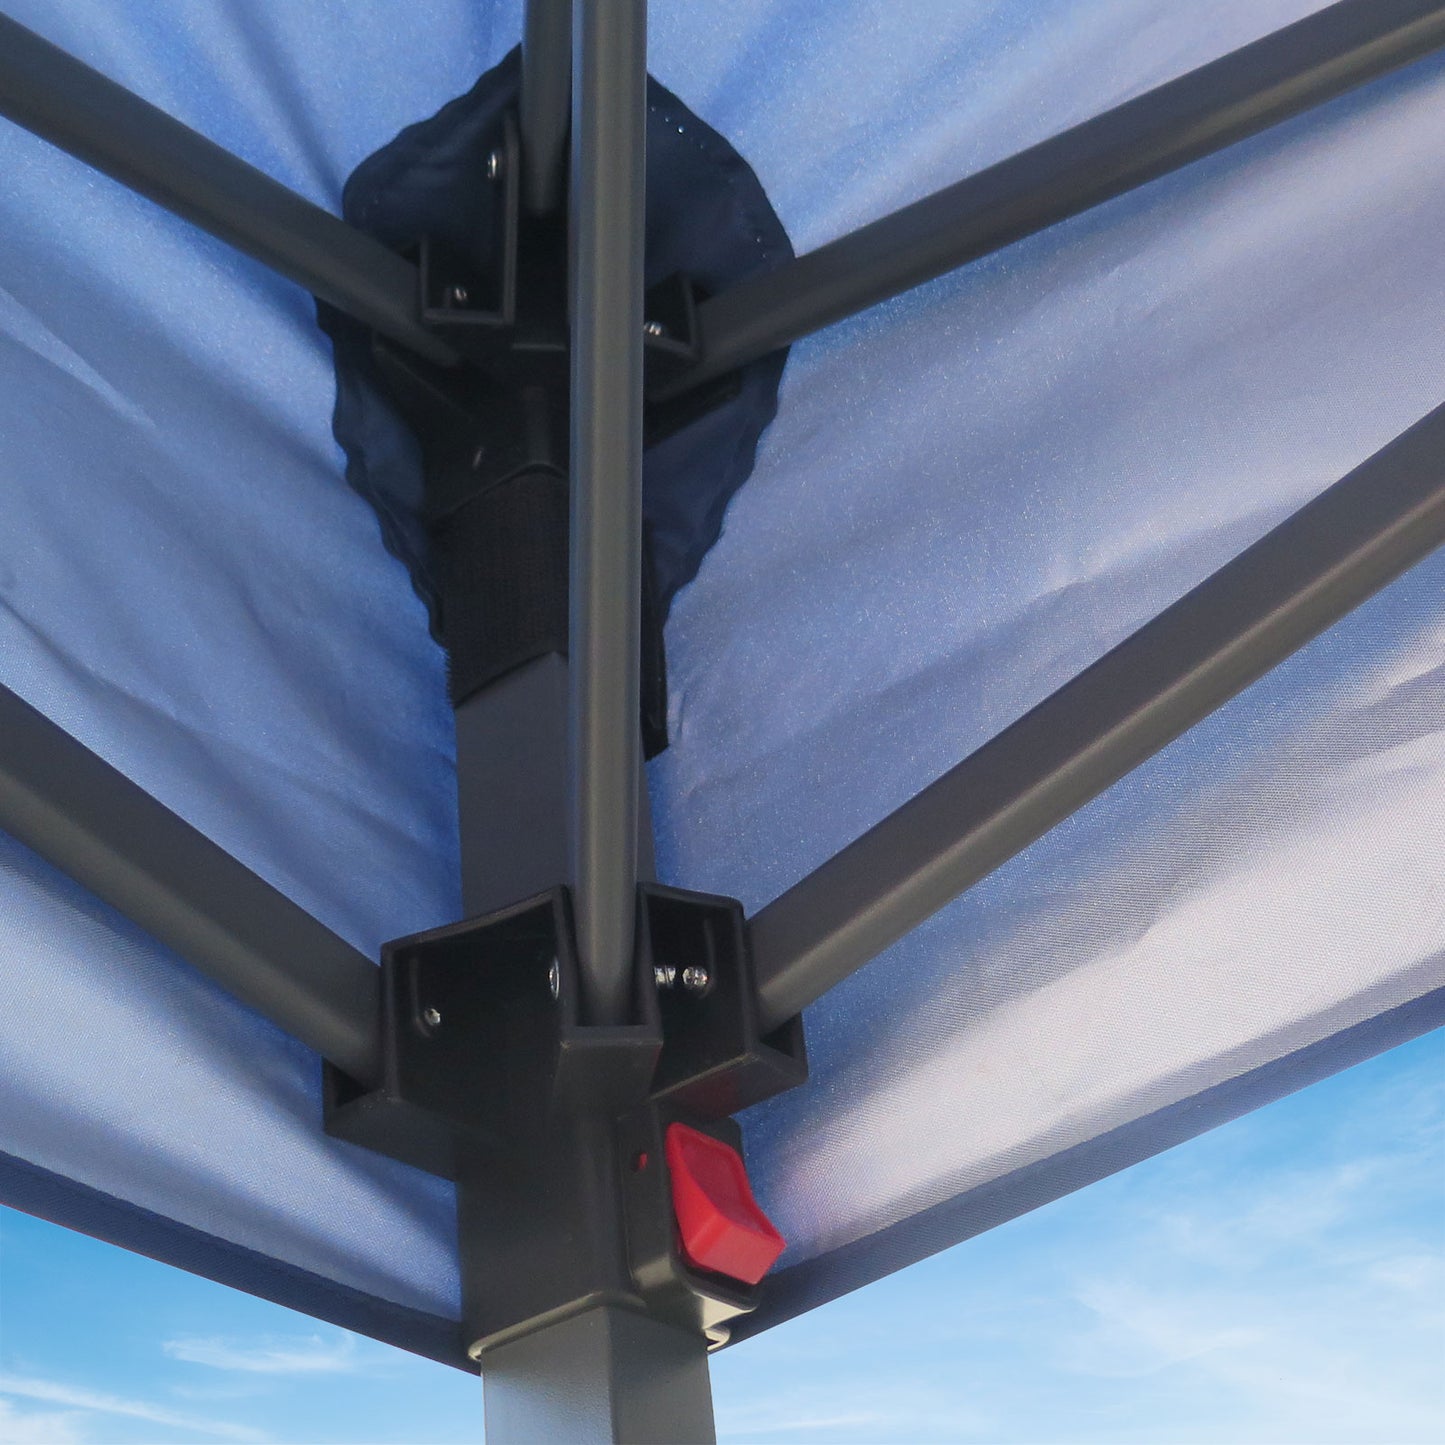 3x3m Outdoor Folding Tent Gazebo - Navy